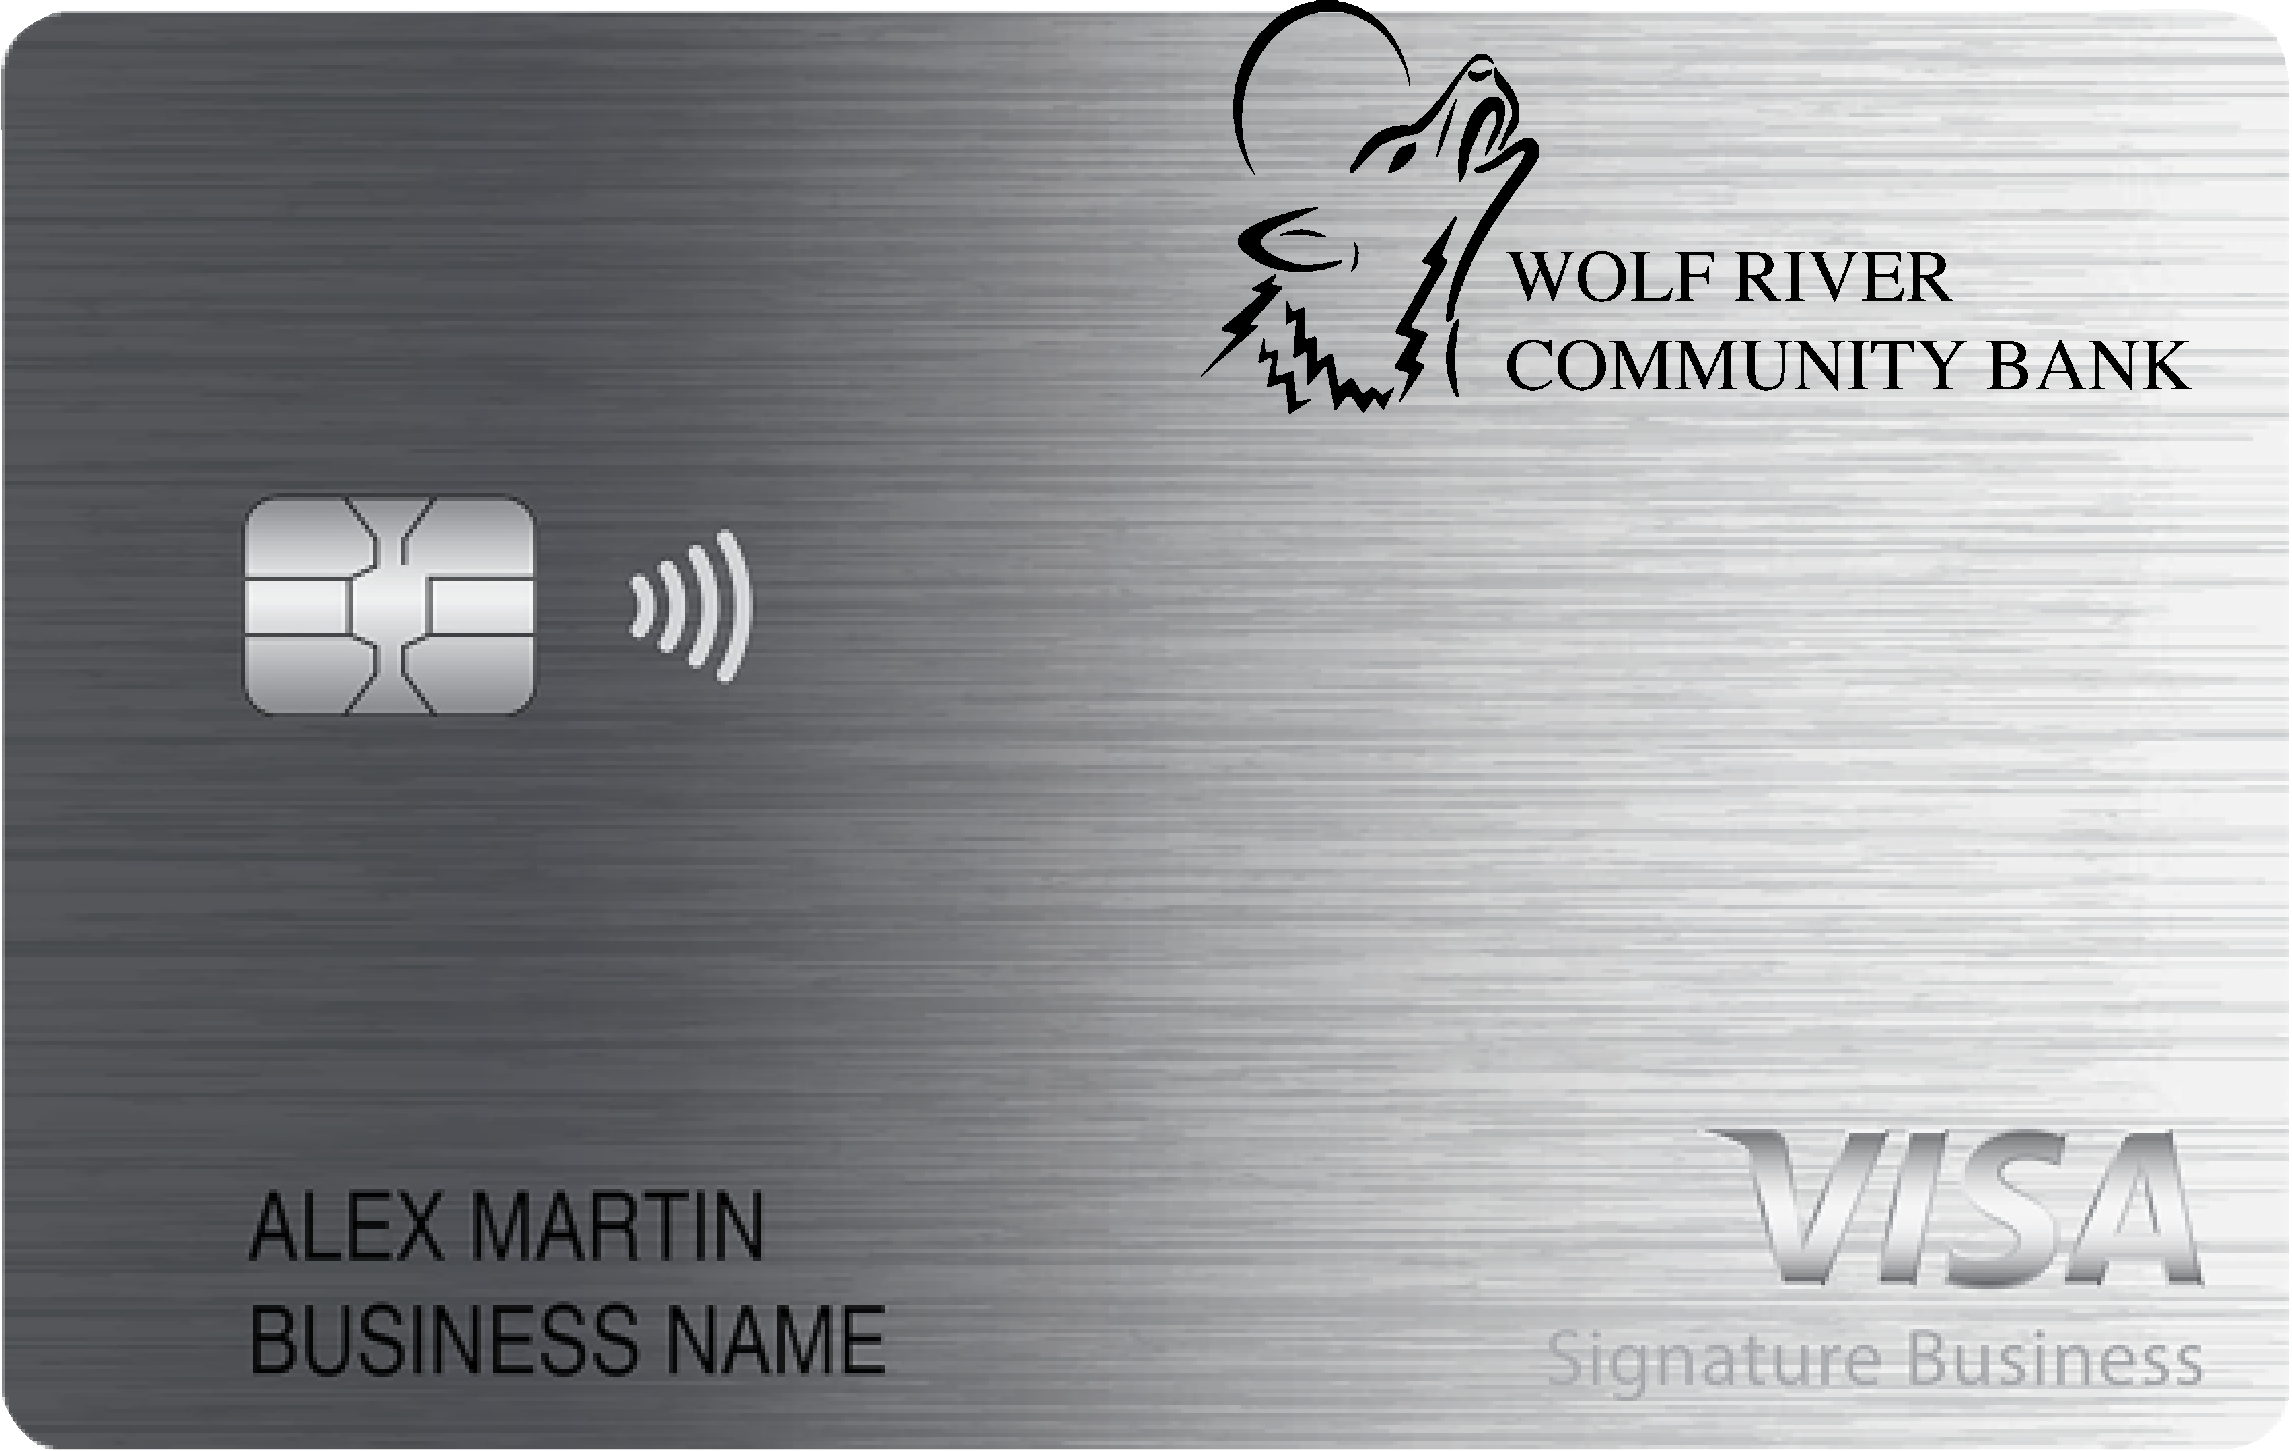 Wolf River Community Bank Smart Business Rewards Card